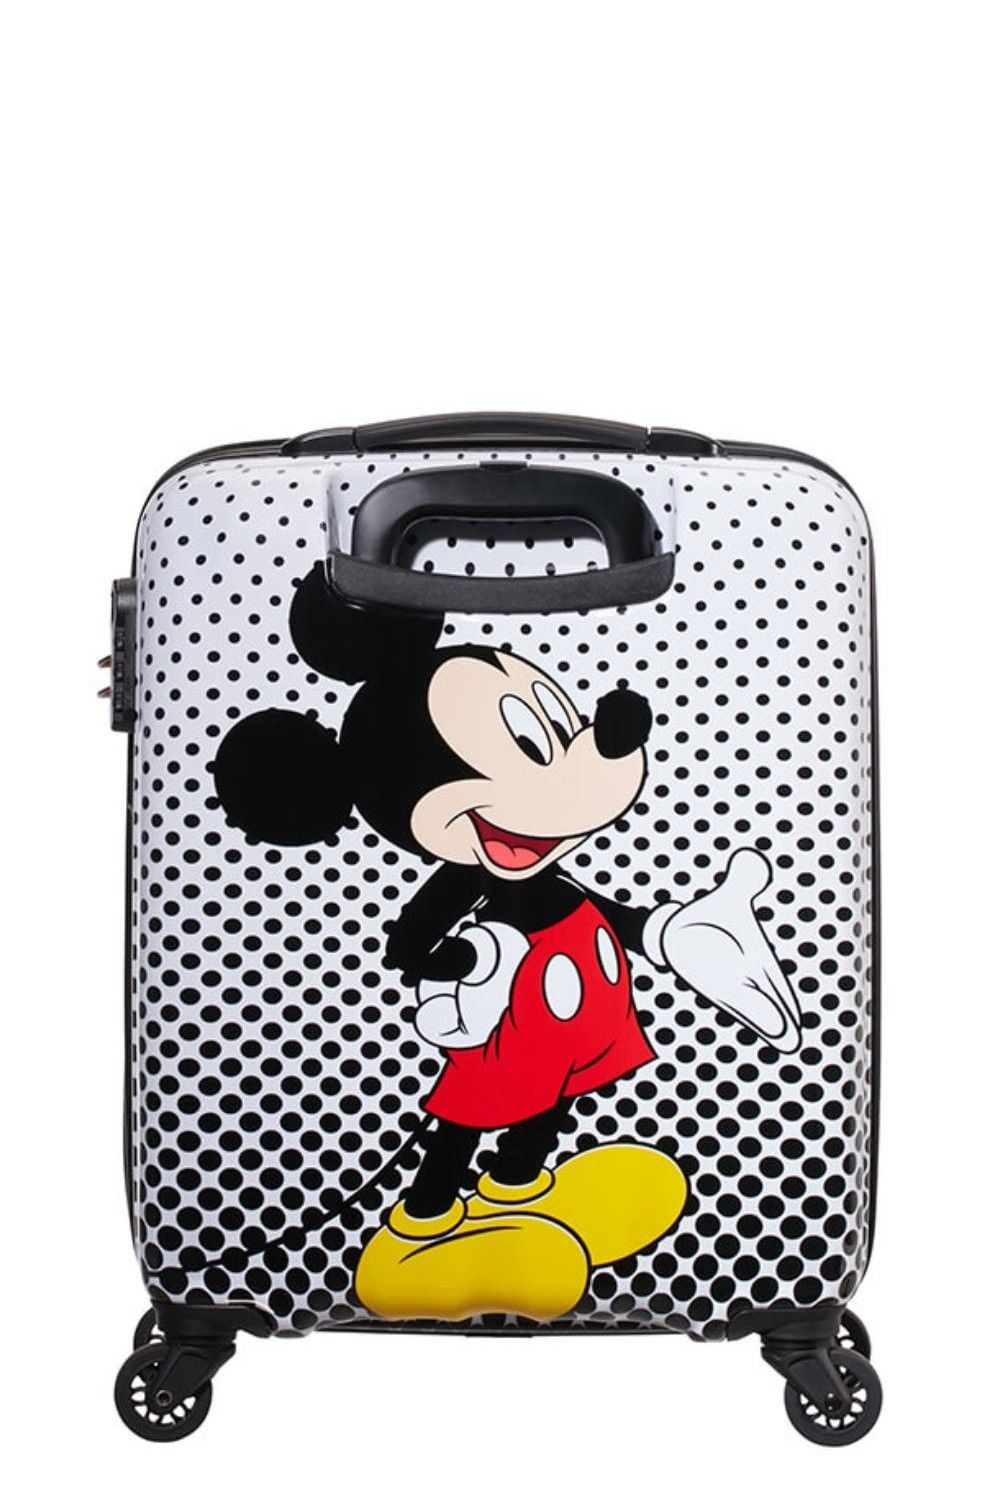 Kinderkoffer Mickey Polka Dot 55x40x20cm Handgepäck